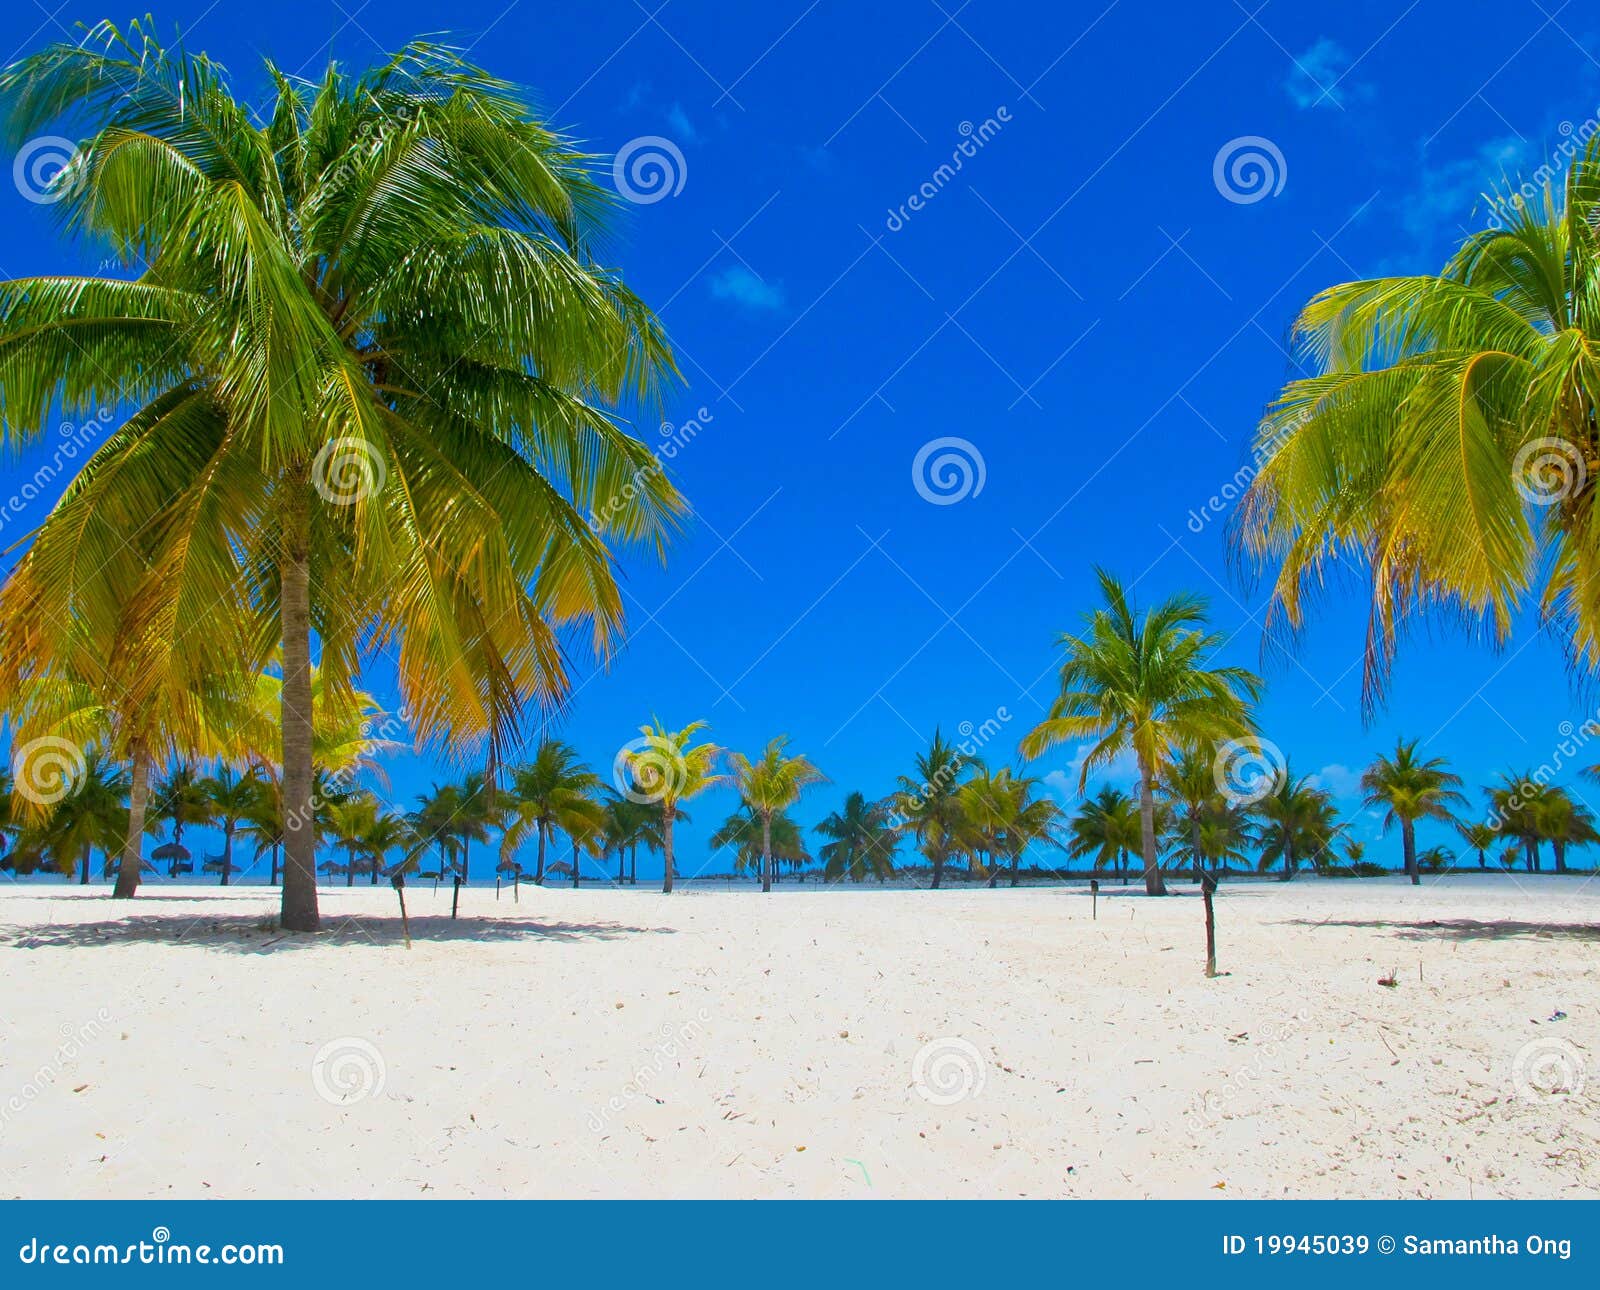 playa sirena (beach), cayo largo, cuba